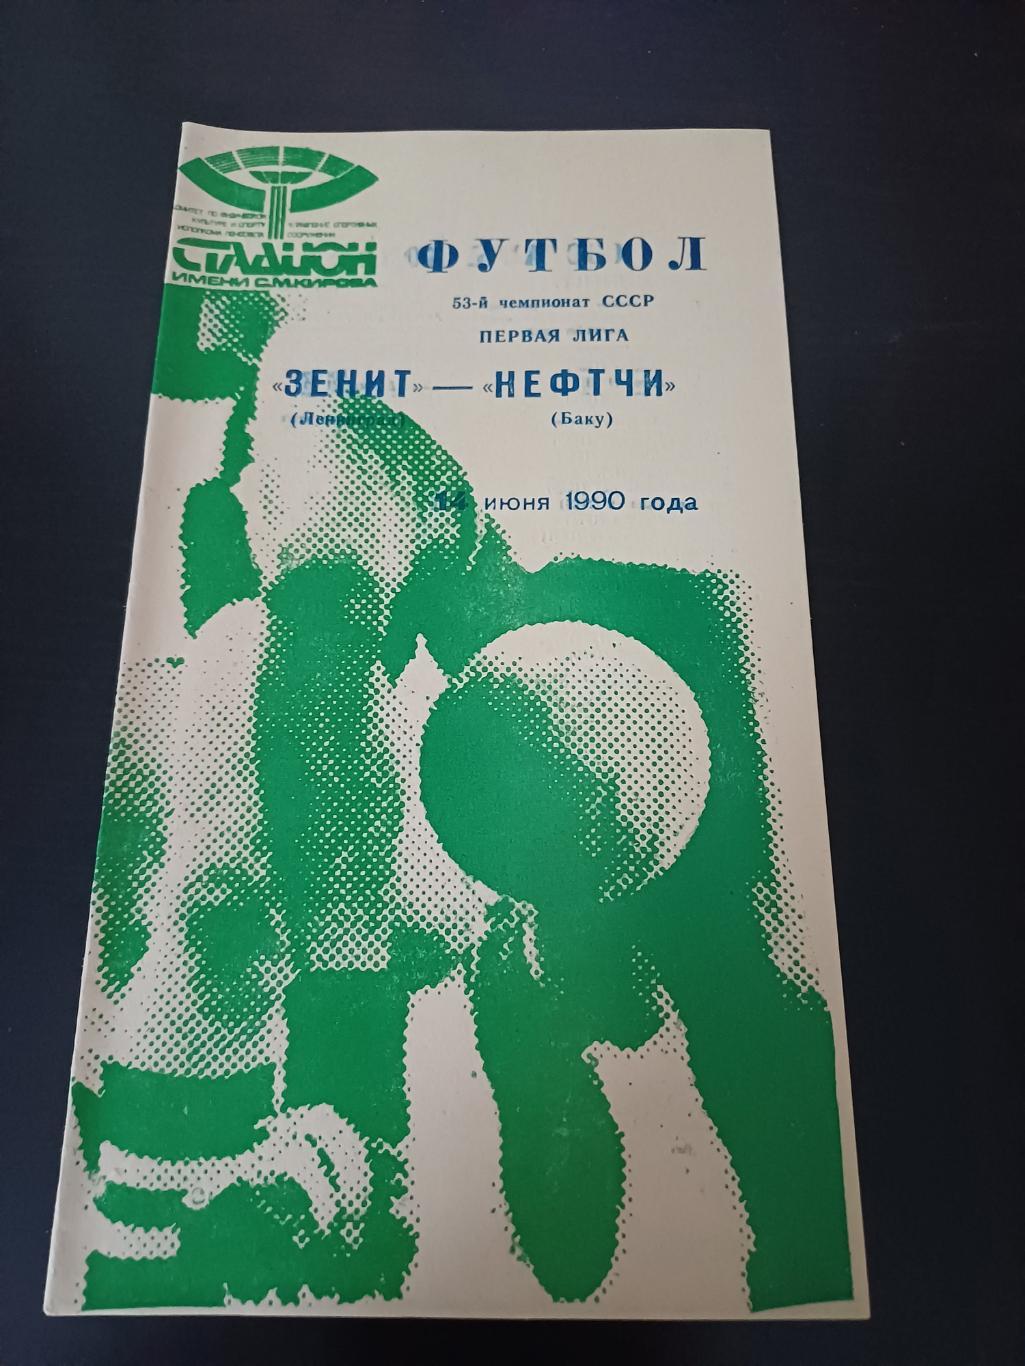 Зенит - Нефтчи 1990